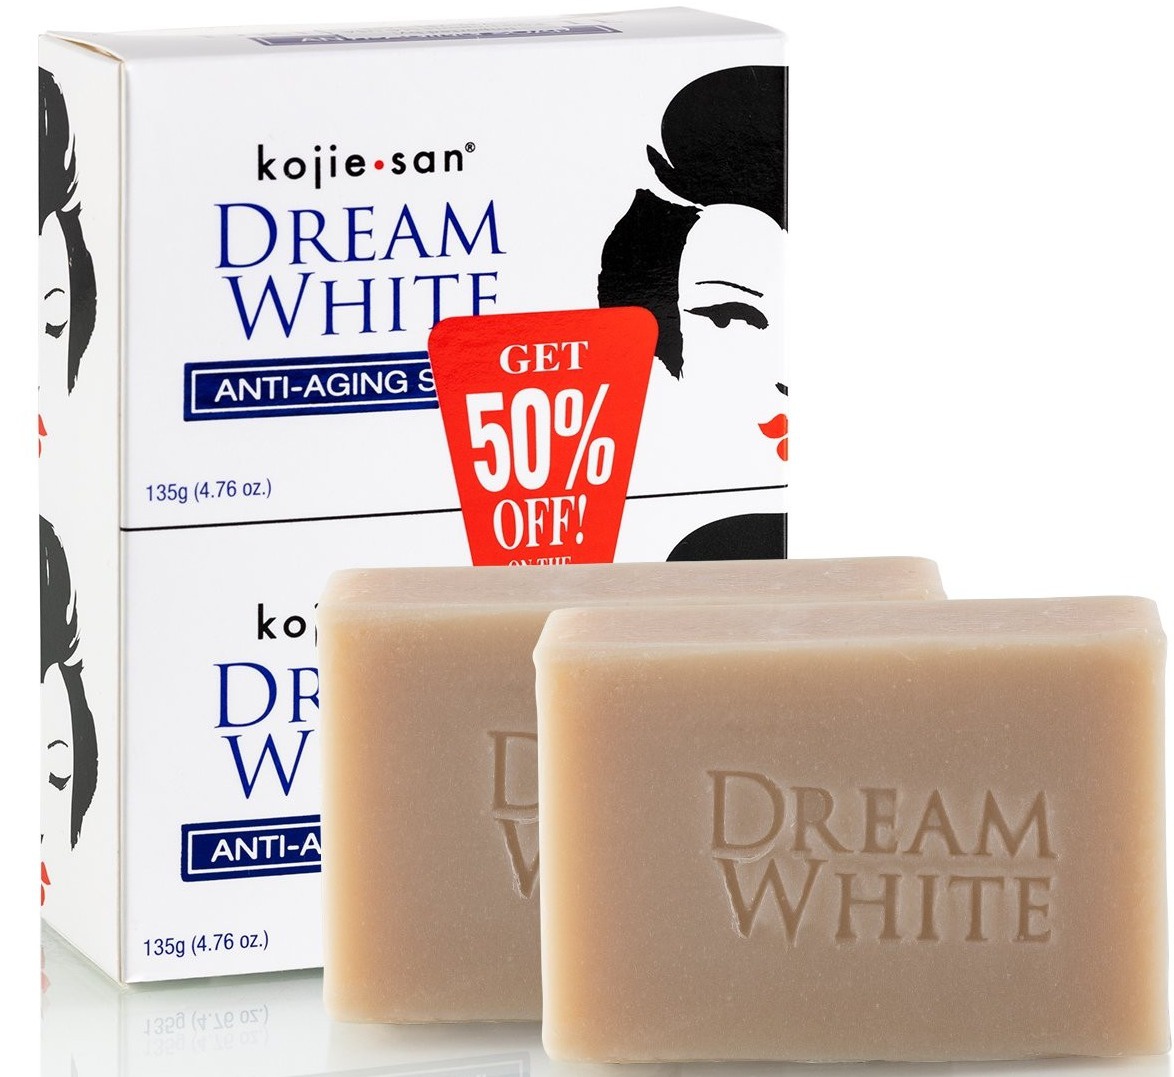 Kojie san Dream White Soap